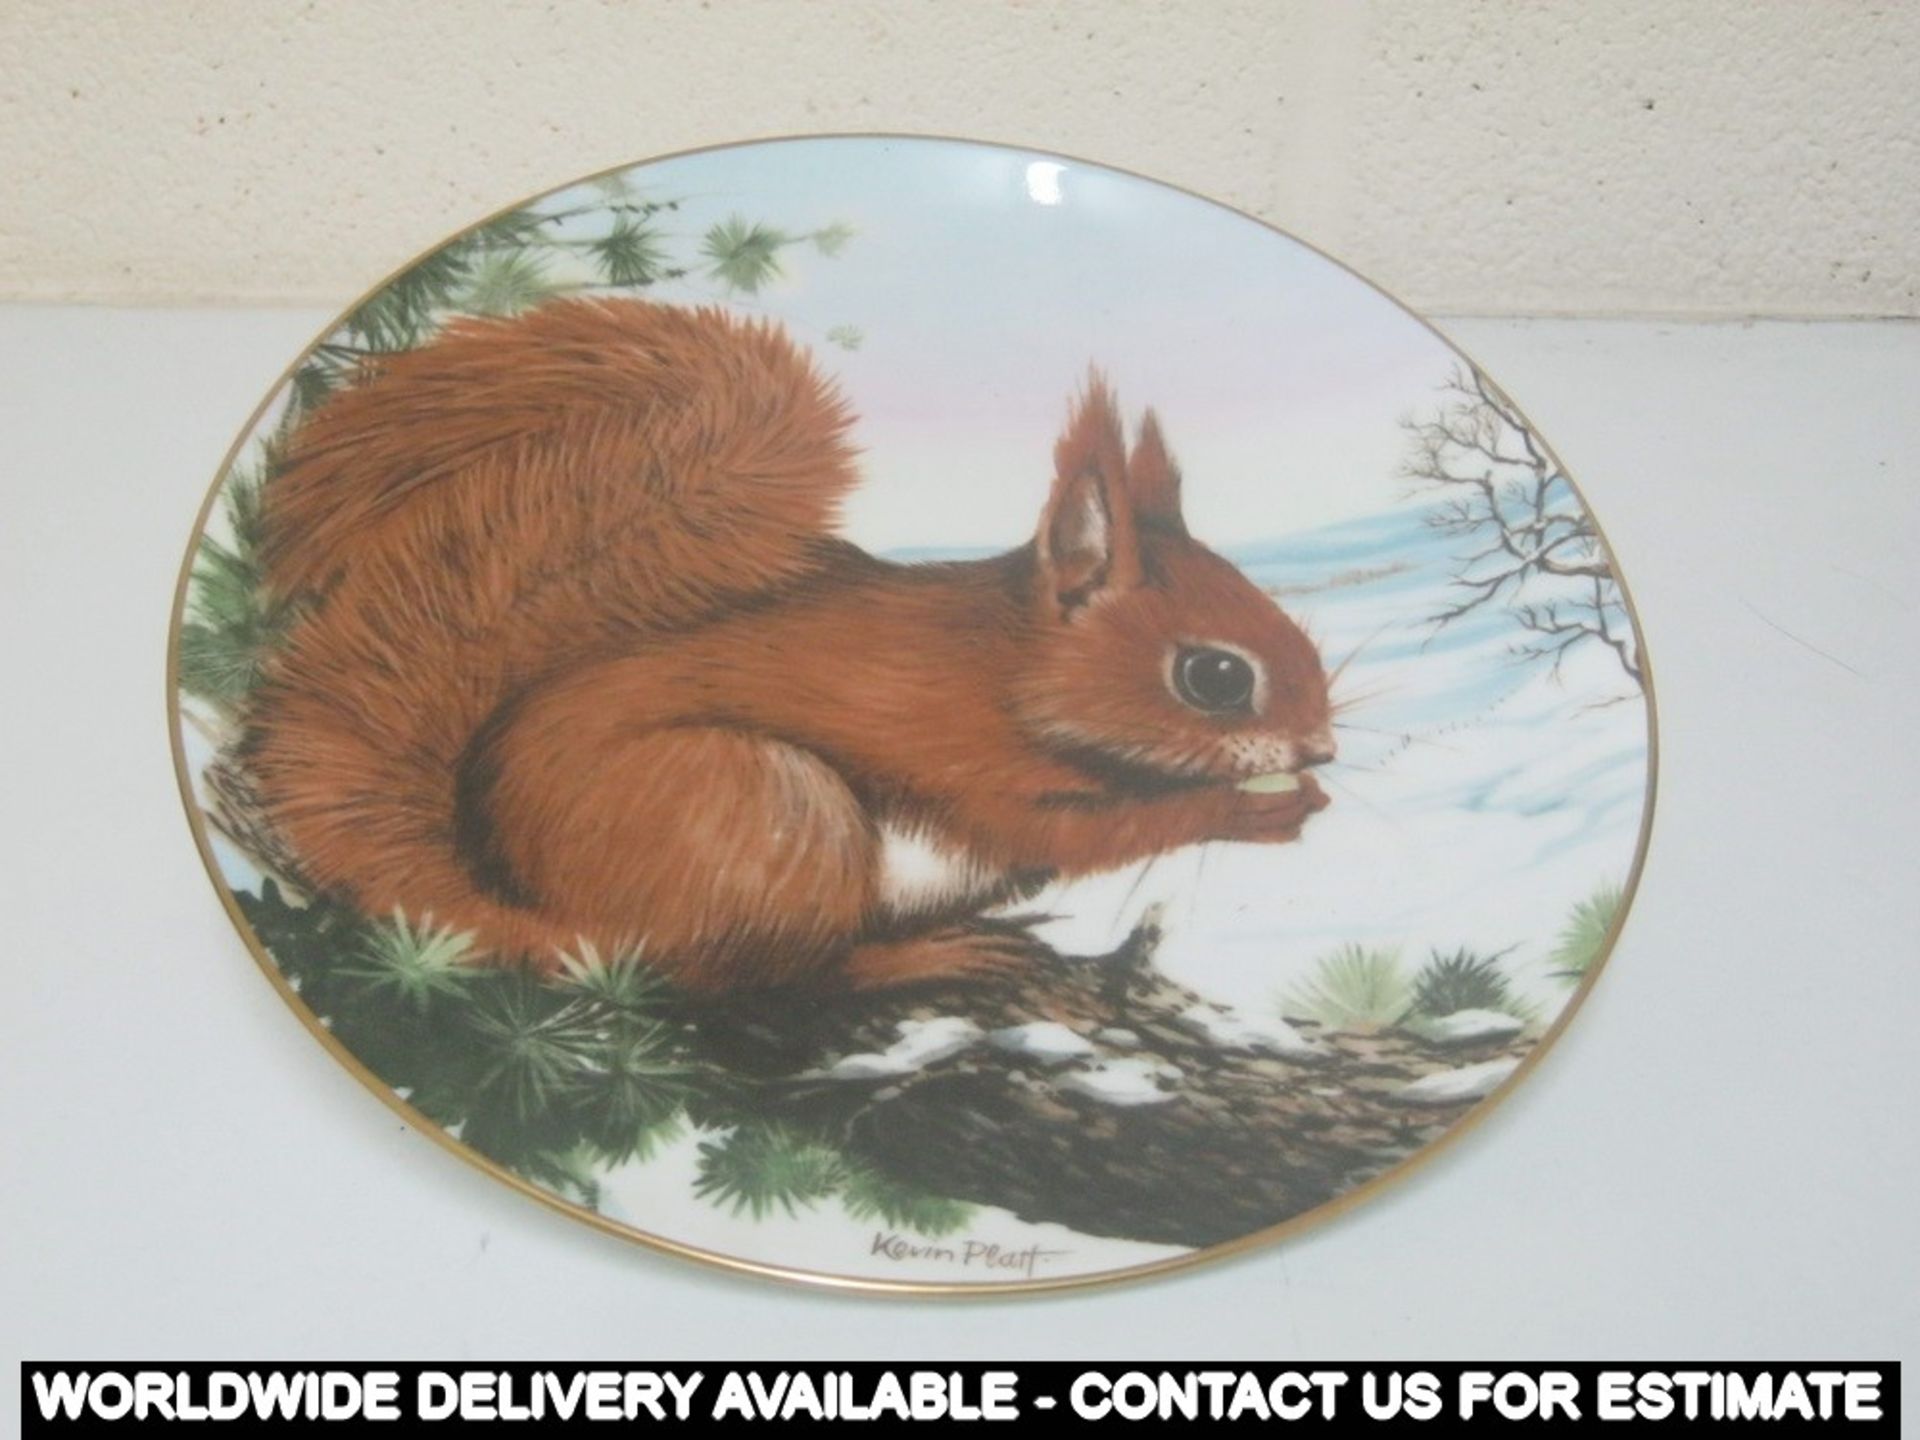 Kevin Platt "Wildlife in Winter" set of four plates - Image 2 of 4